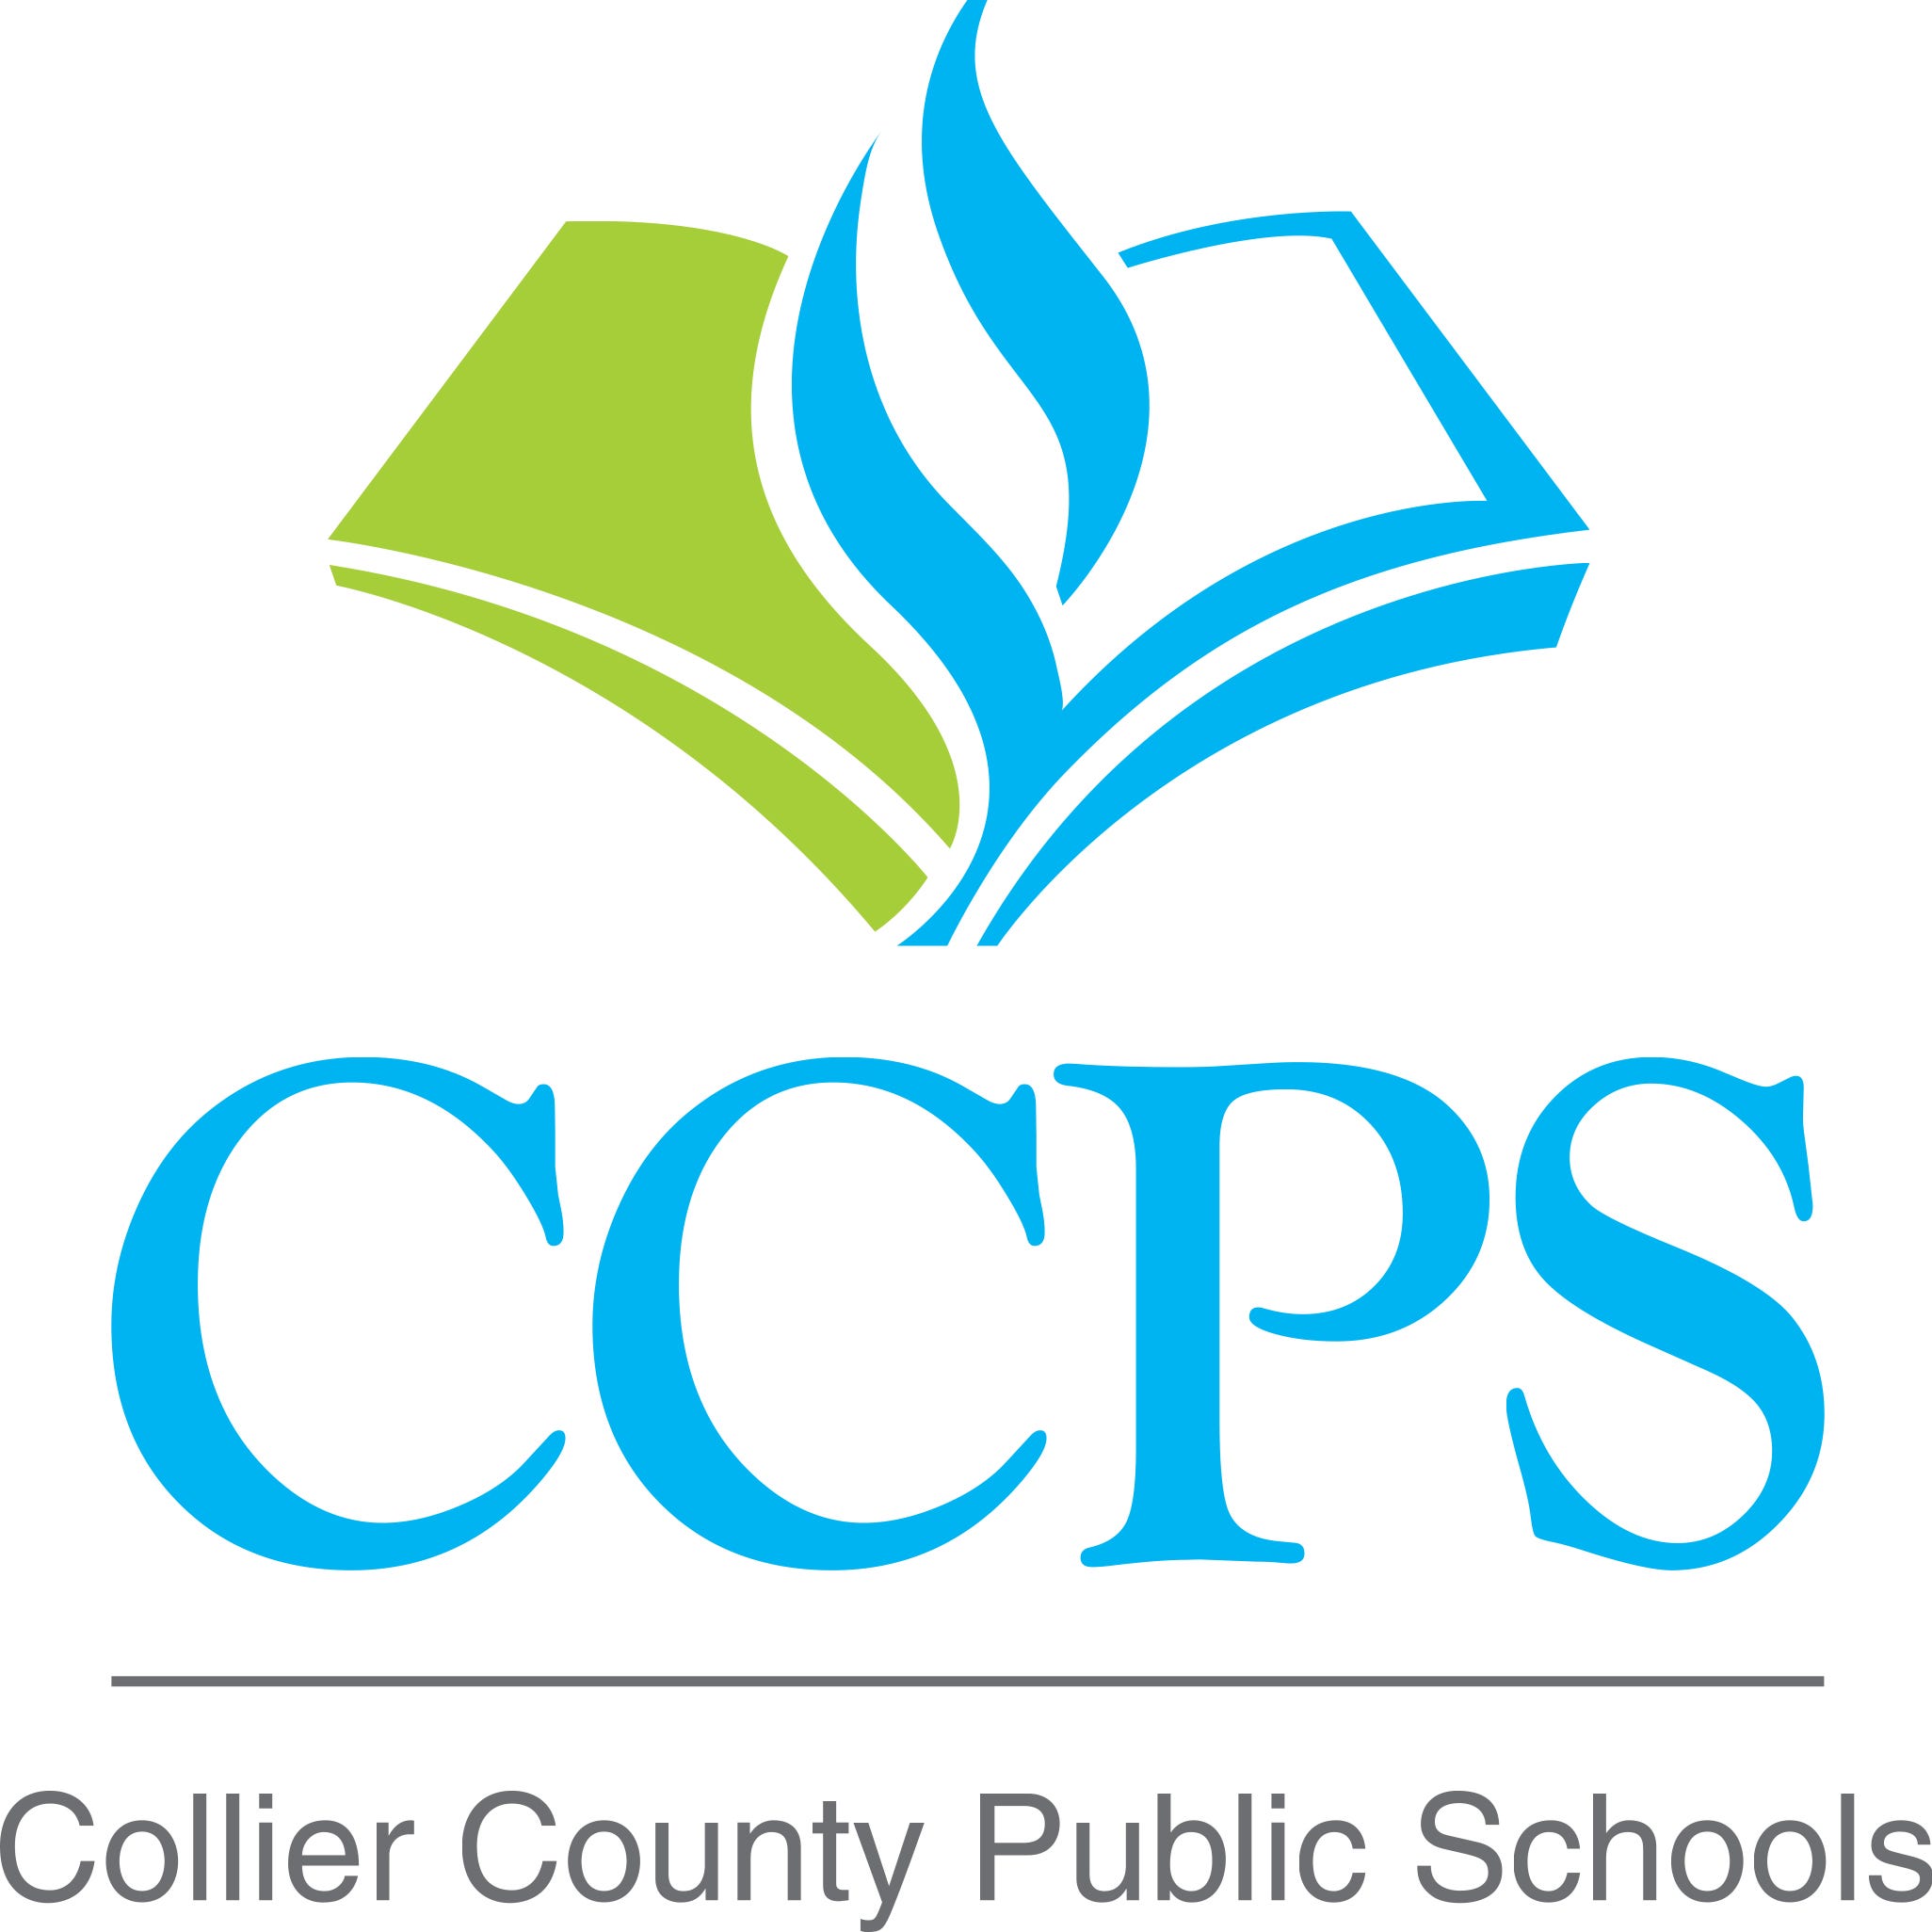 How Collier County Public Schools Incorporates SEL into Strategic Priorities